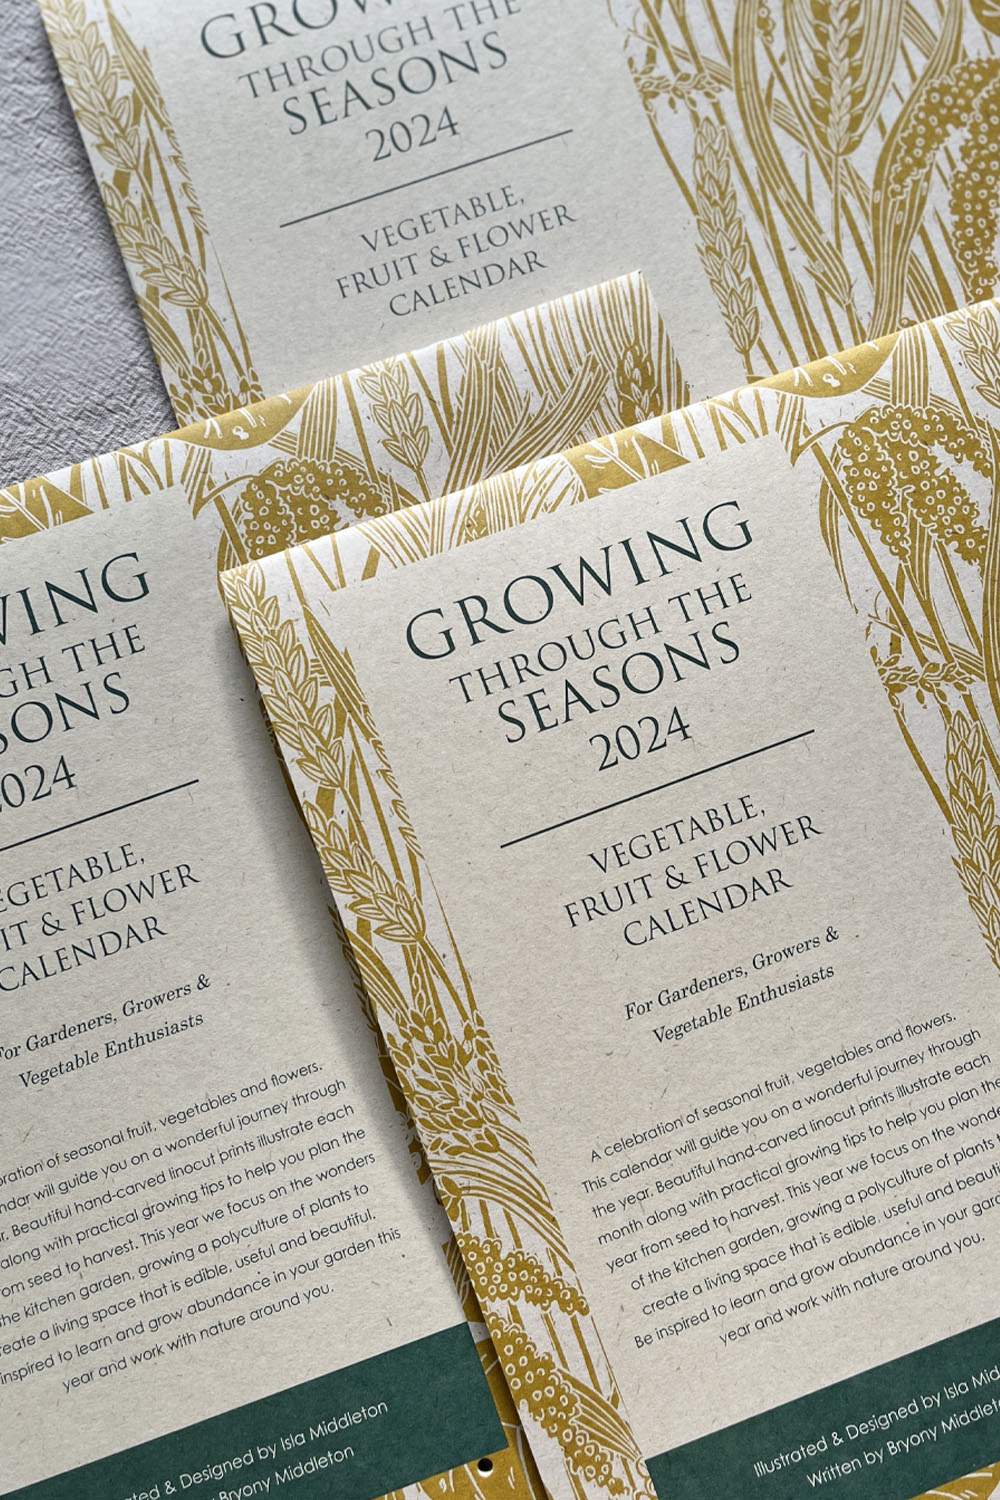 Growing Through The Seasons 2024 Calendar By Isla Middleton